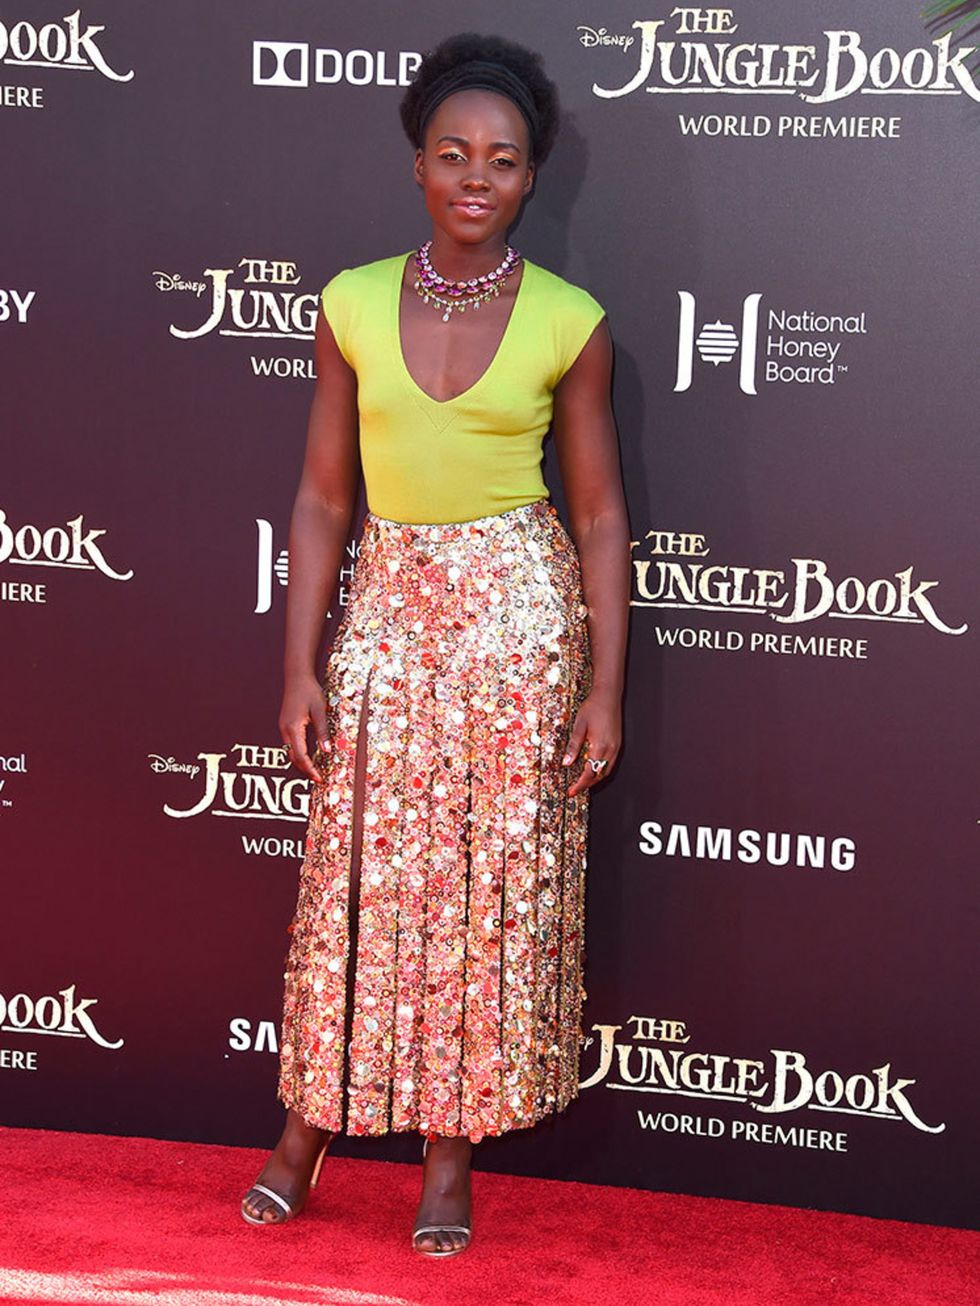 Lupita Nyong'o at the Jungle Book premiere in LA, April 2016.